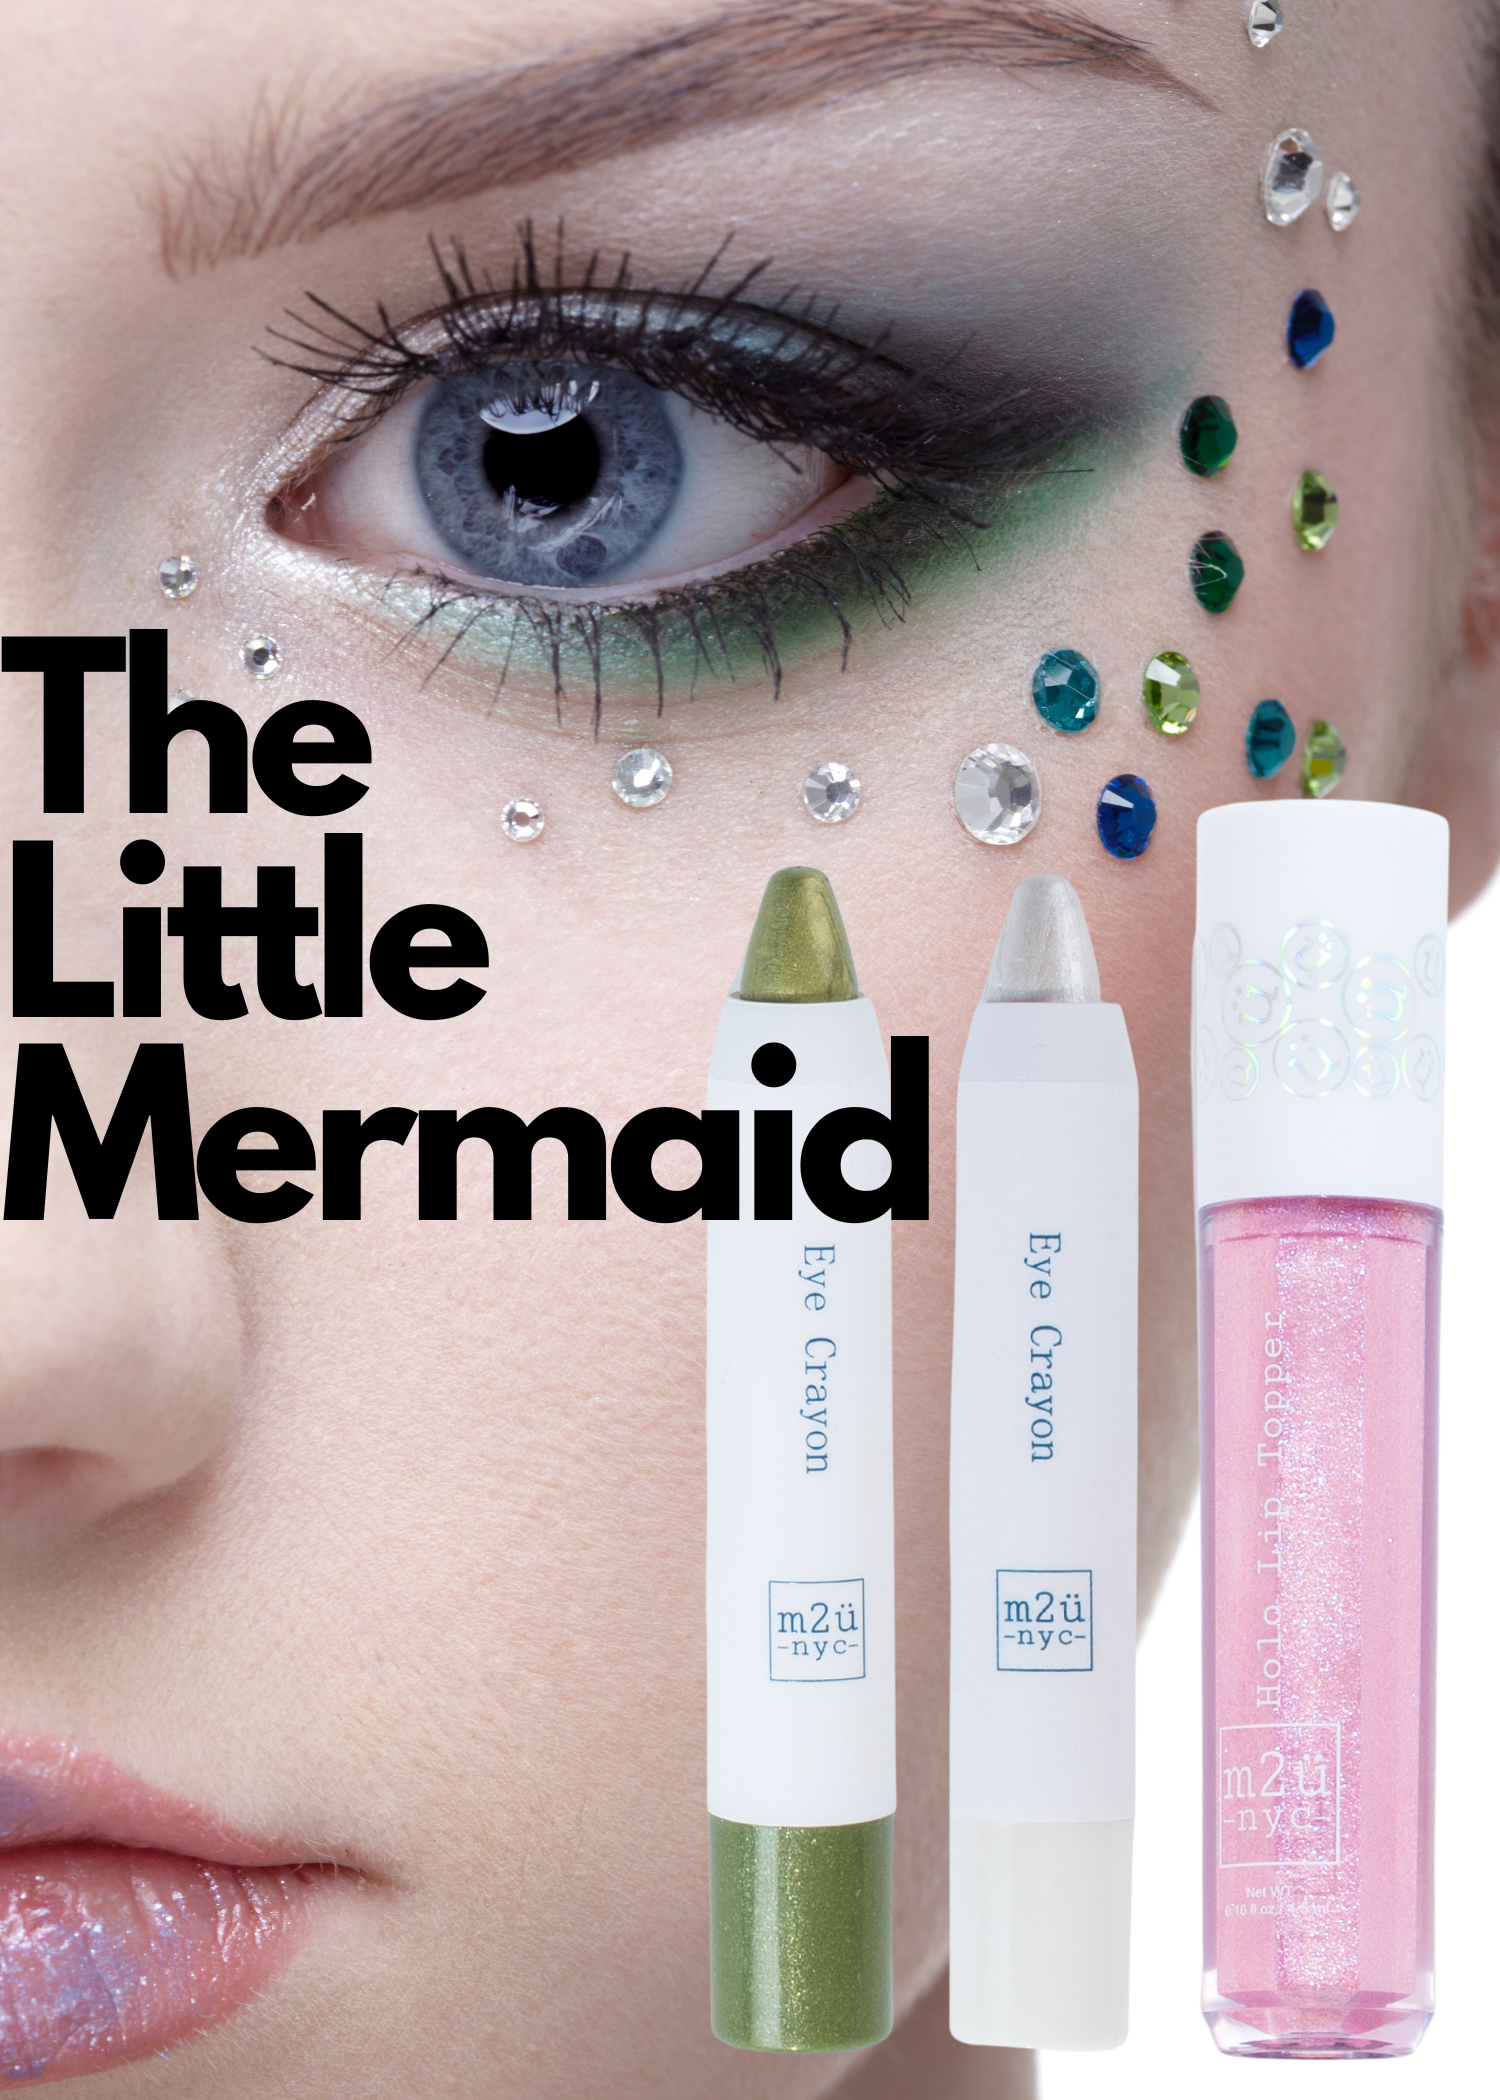 The Little Mermaid makeup